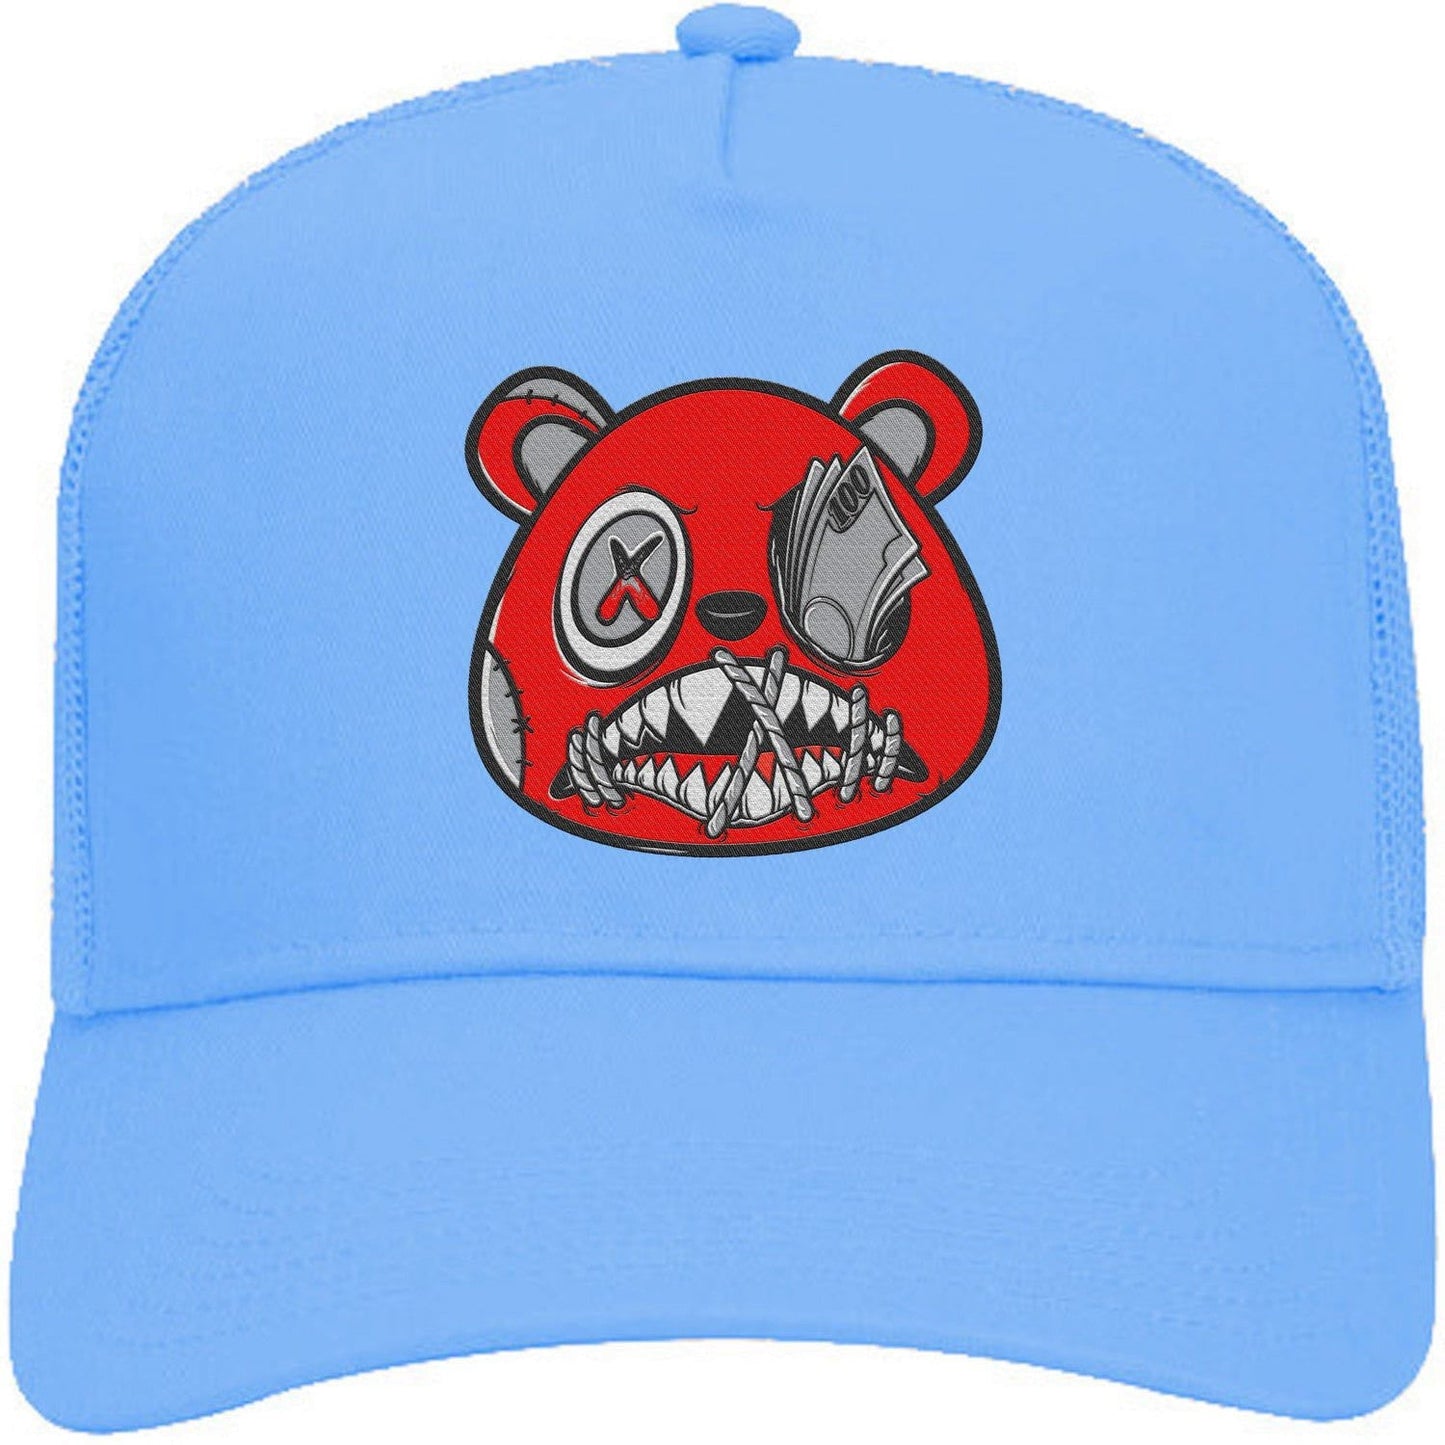 UNC 5s Trucker Hats - Jordan 5 University Blue Hats - Money Talks Baws